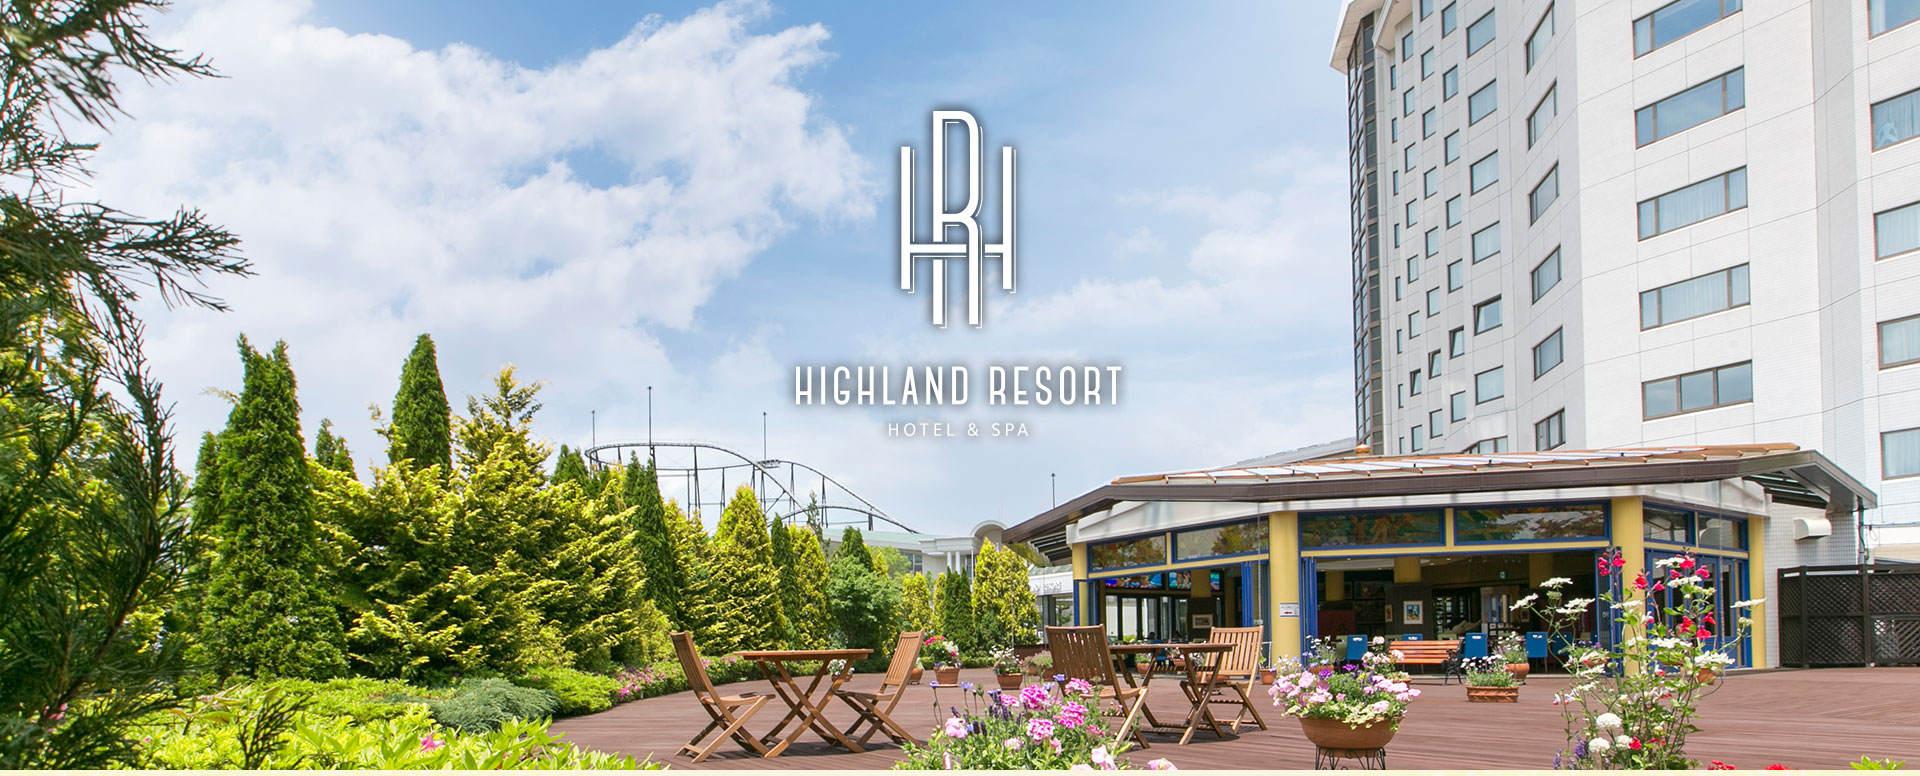 Highland Resort Hotel & Spa